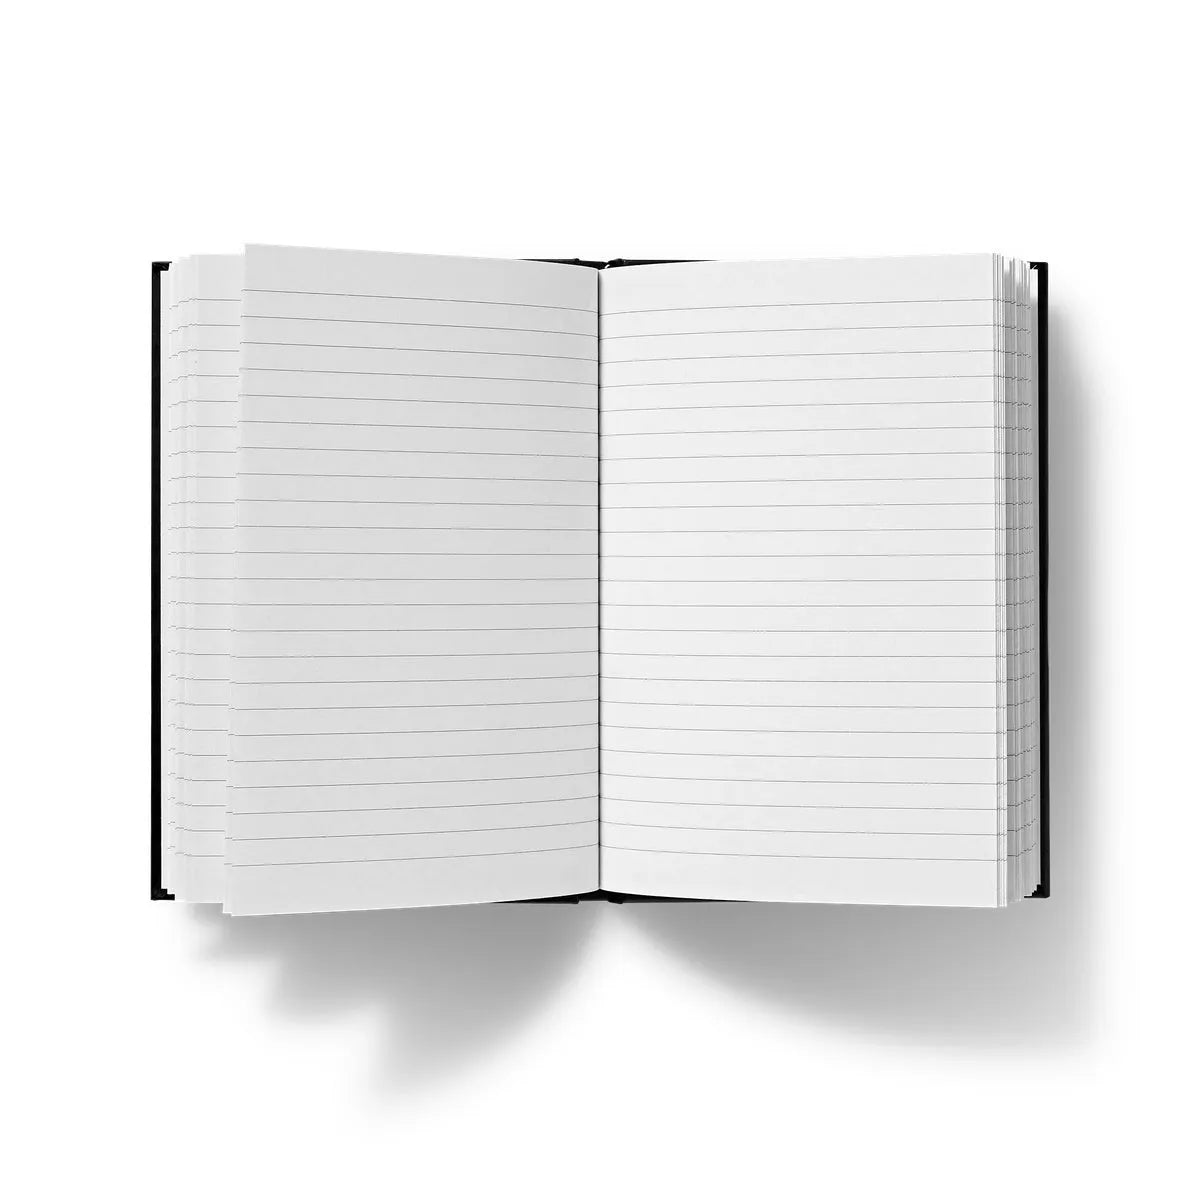 Tweedledee Hardback Journal - Notebooks & Notepads - Aesthetic Art